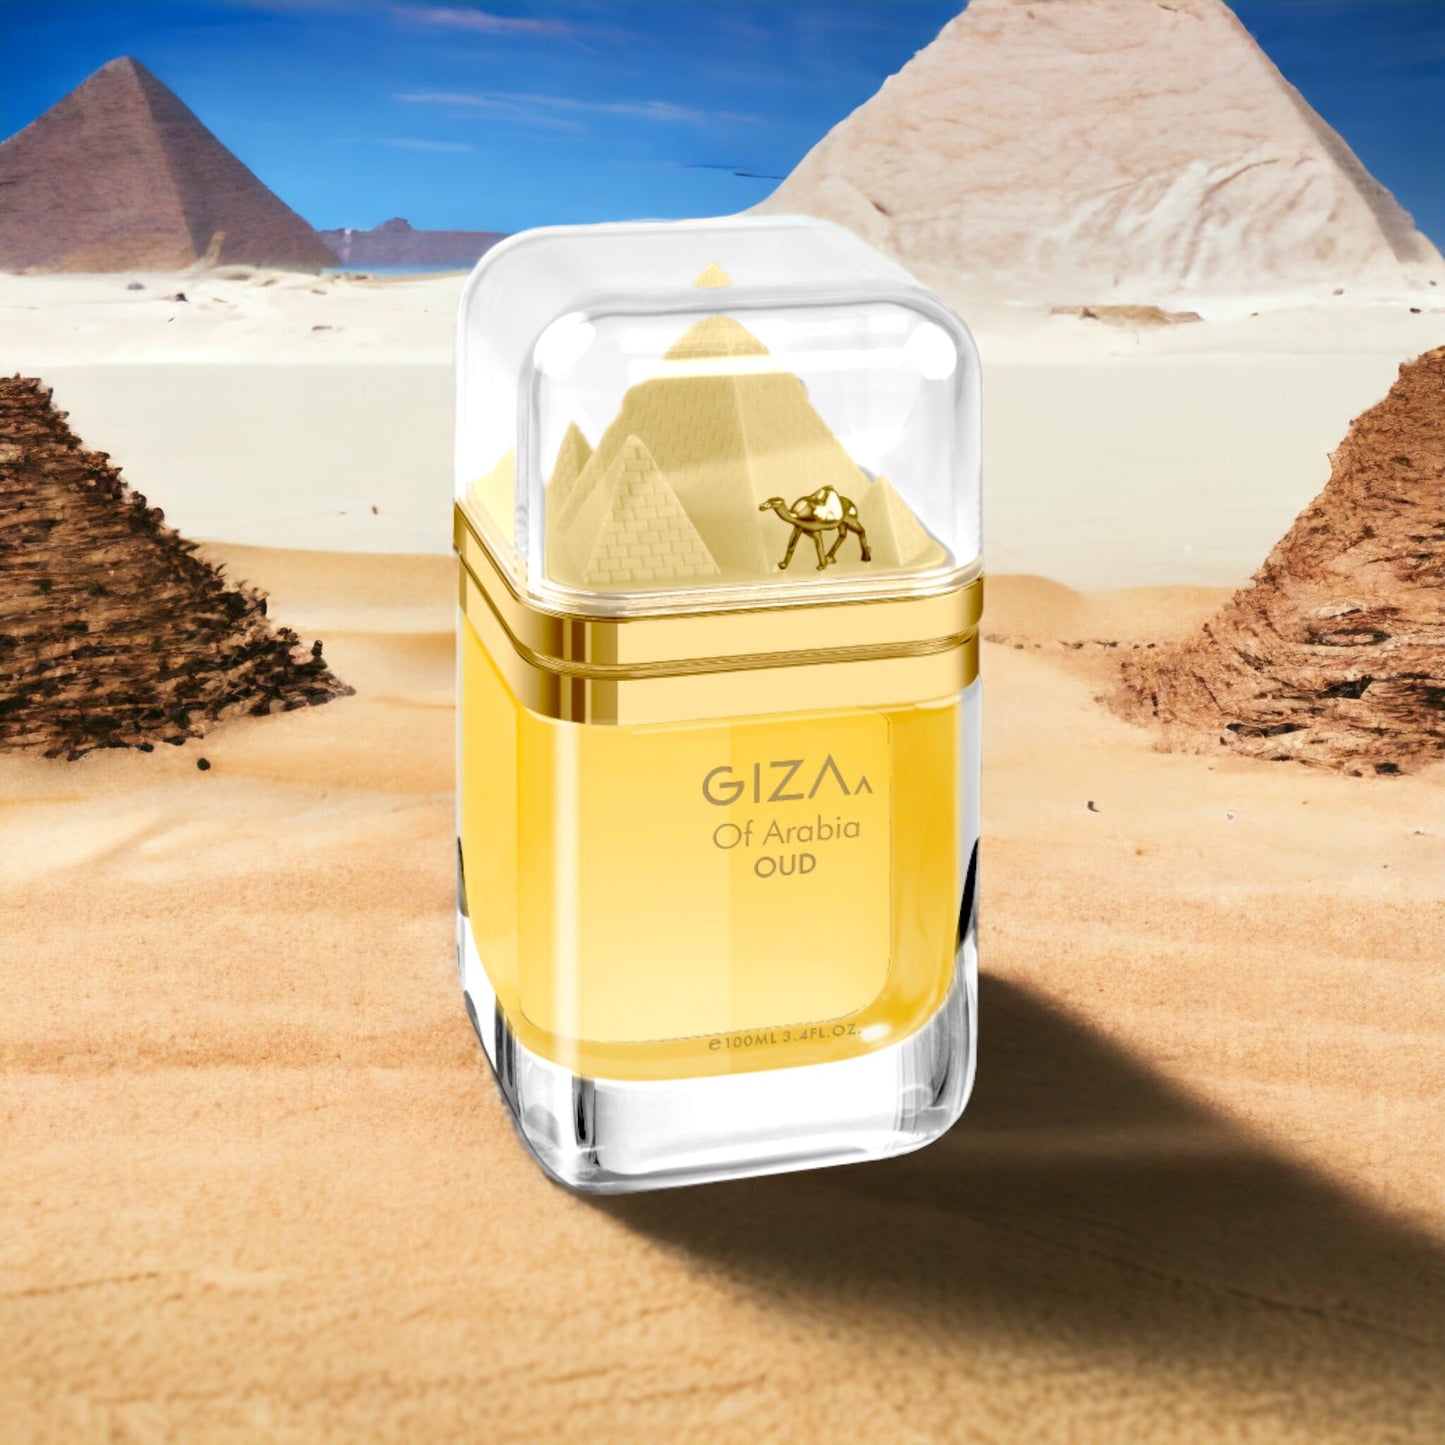 Giza of Arabia by Le Chameau Eau de Parfum Spray 3.4 oz Unisex